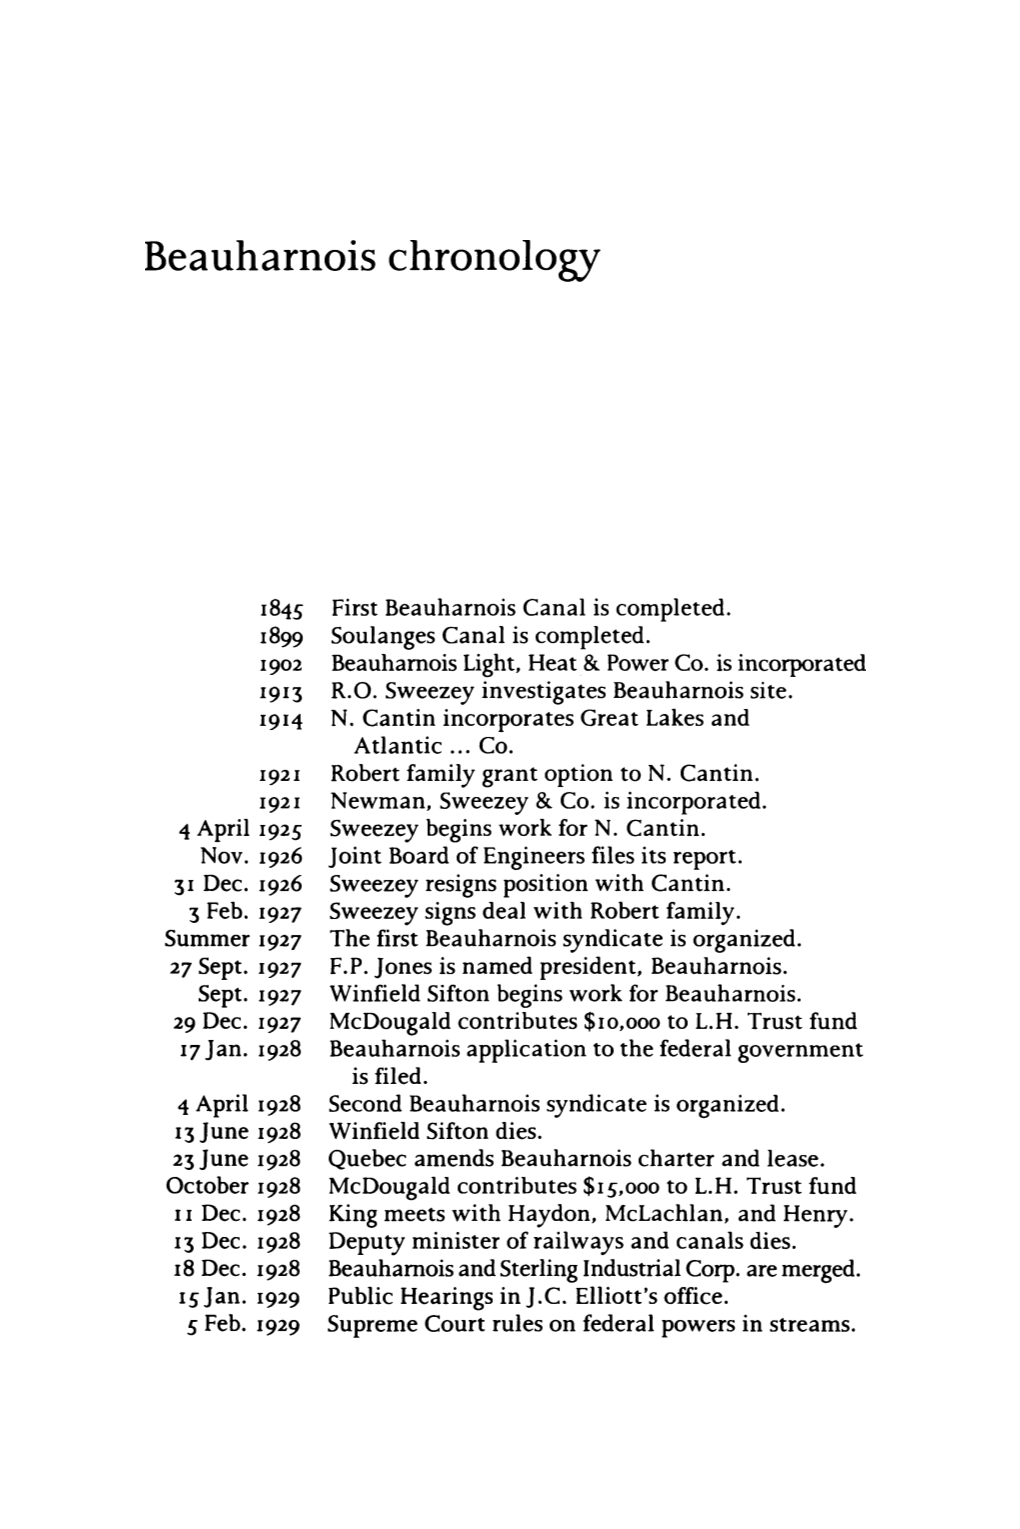 Beauharnois Chronology